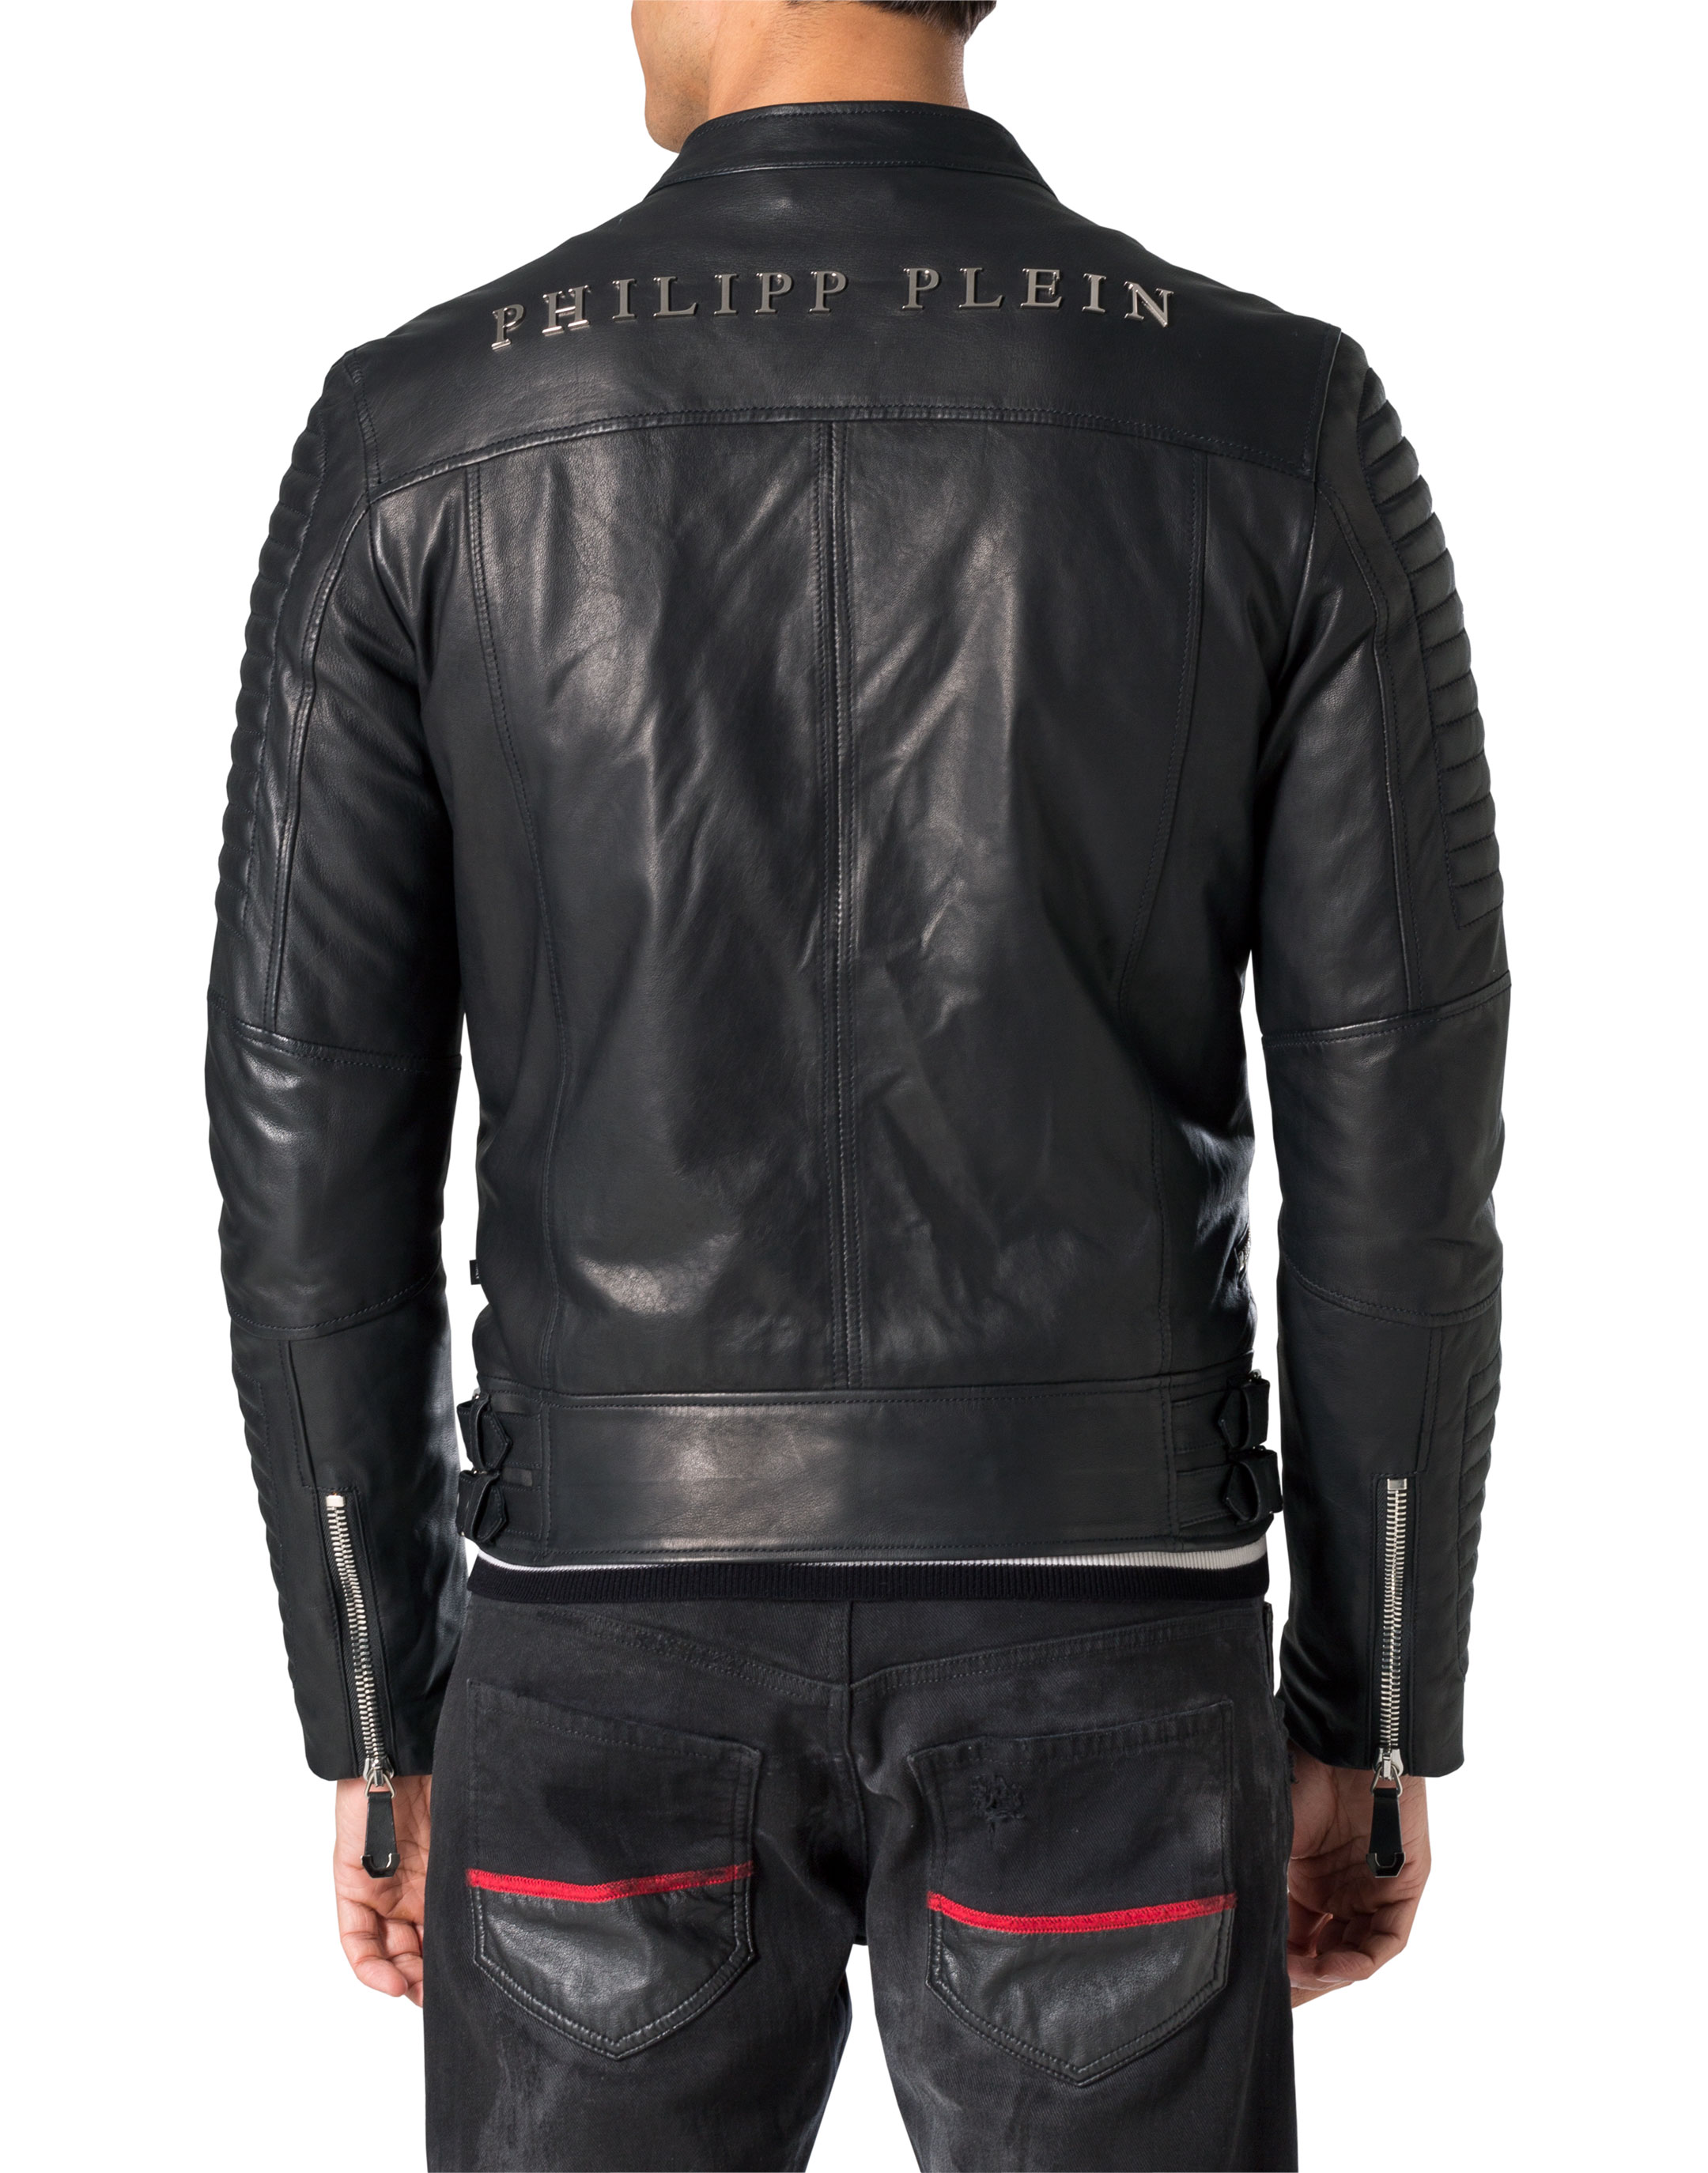 plein leather jacket